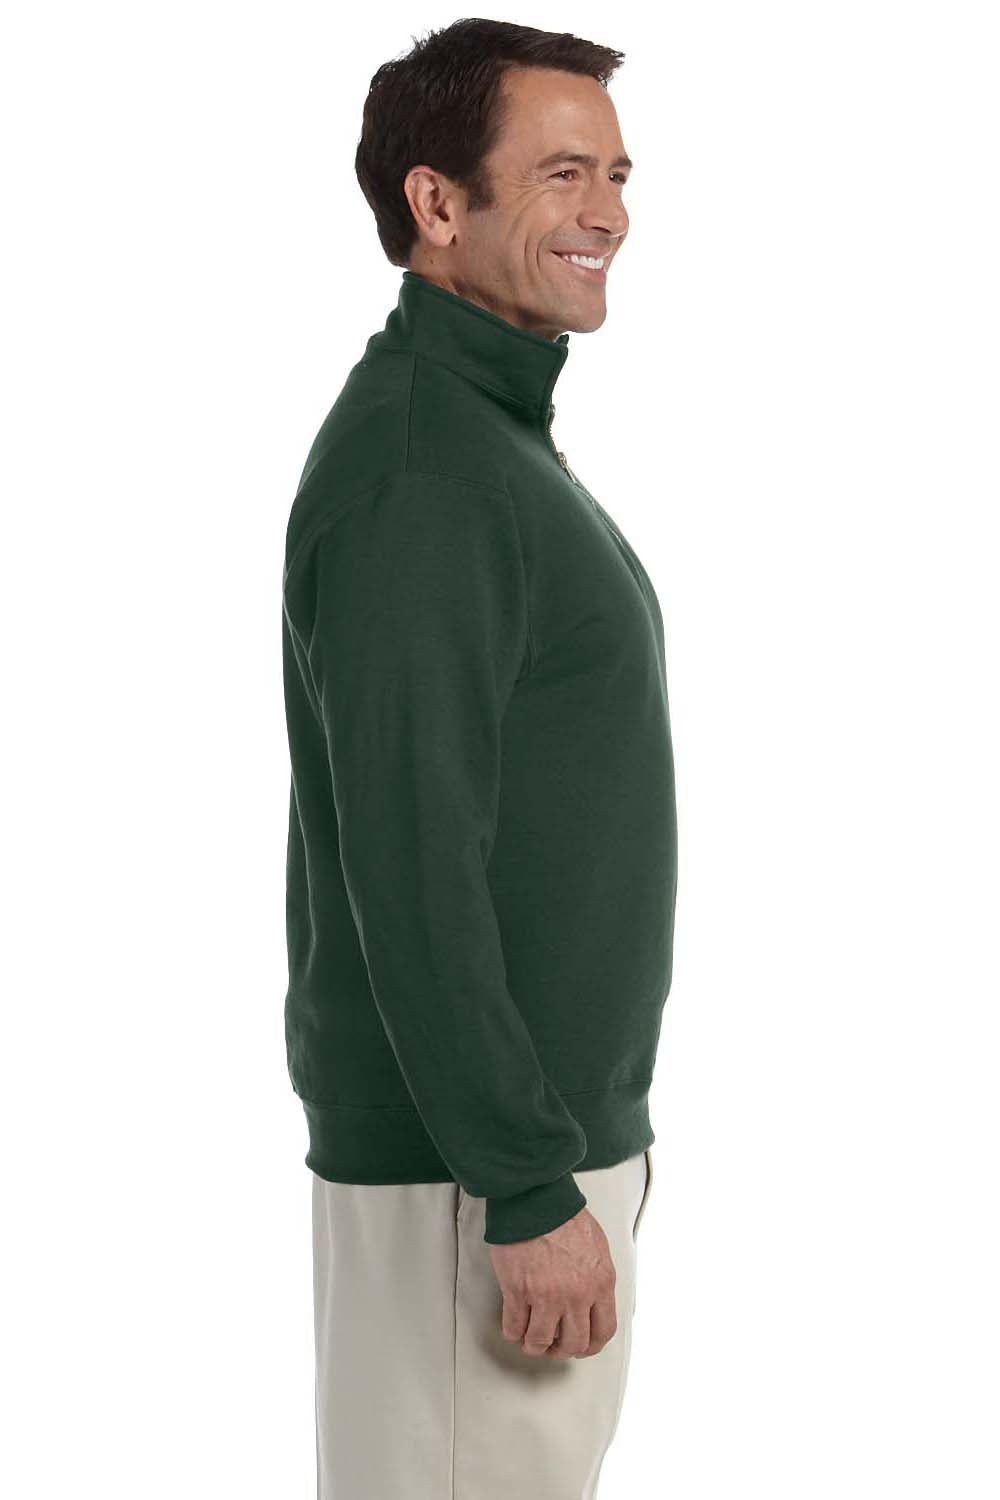 Jerzees 4528 Mens Super Sweats NuBlend Fleece 1/4 Zip Sweatshirt Forest Green Side